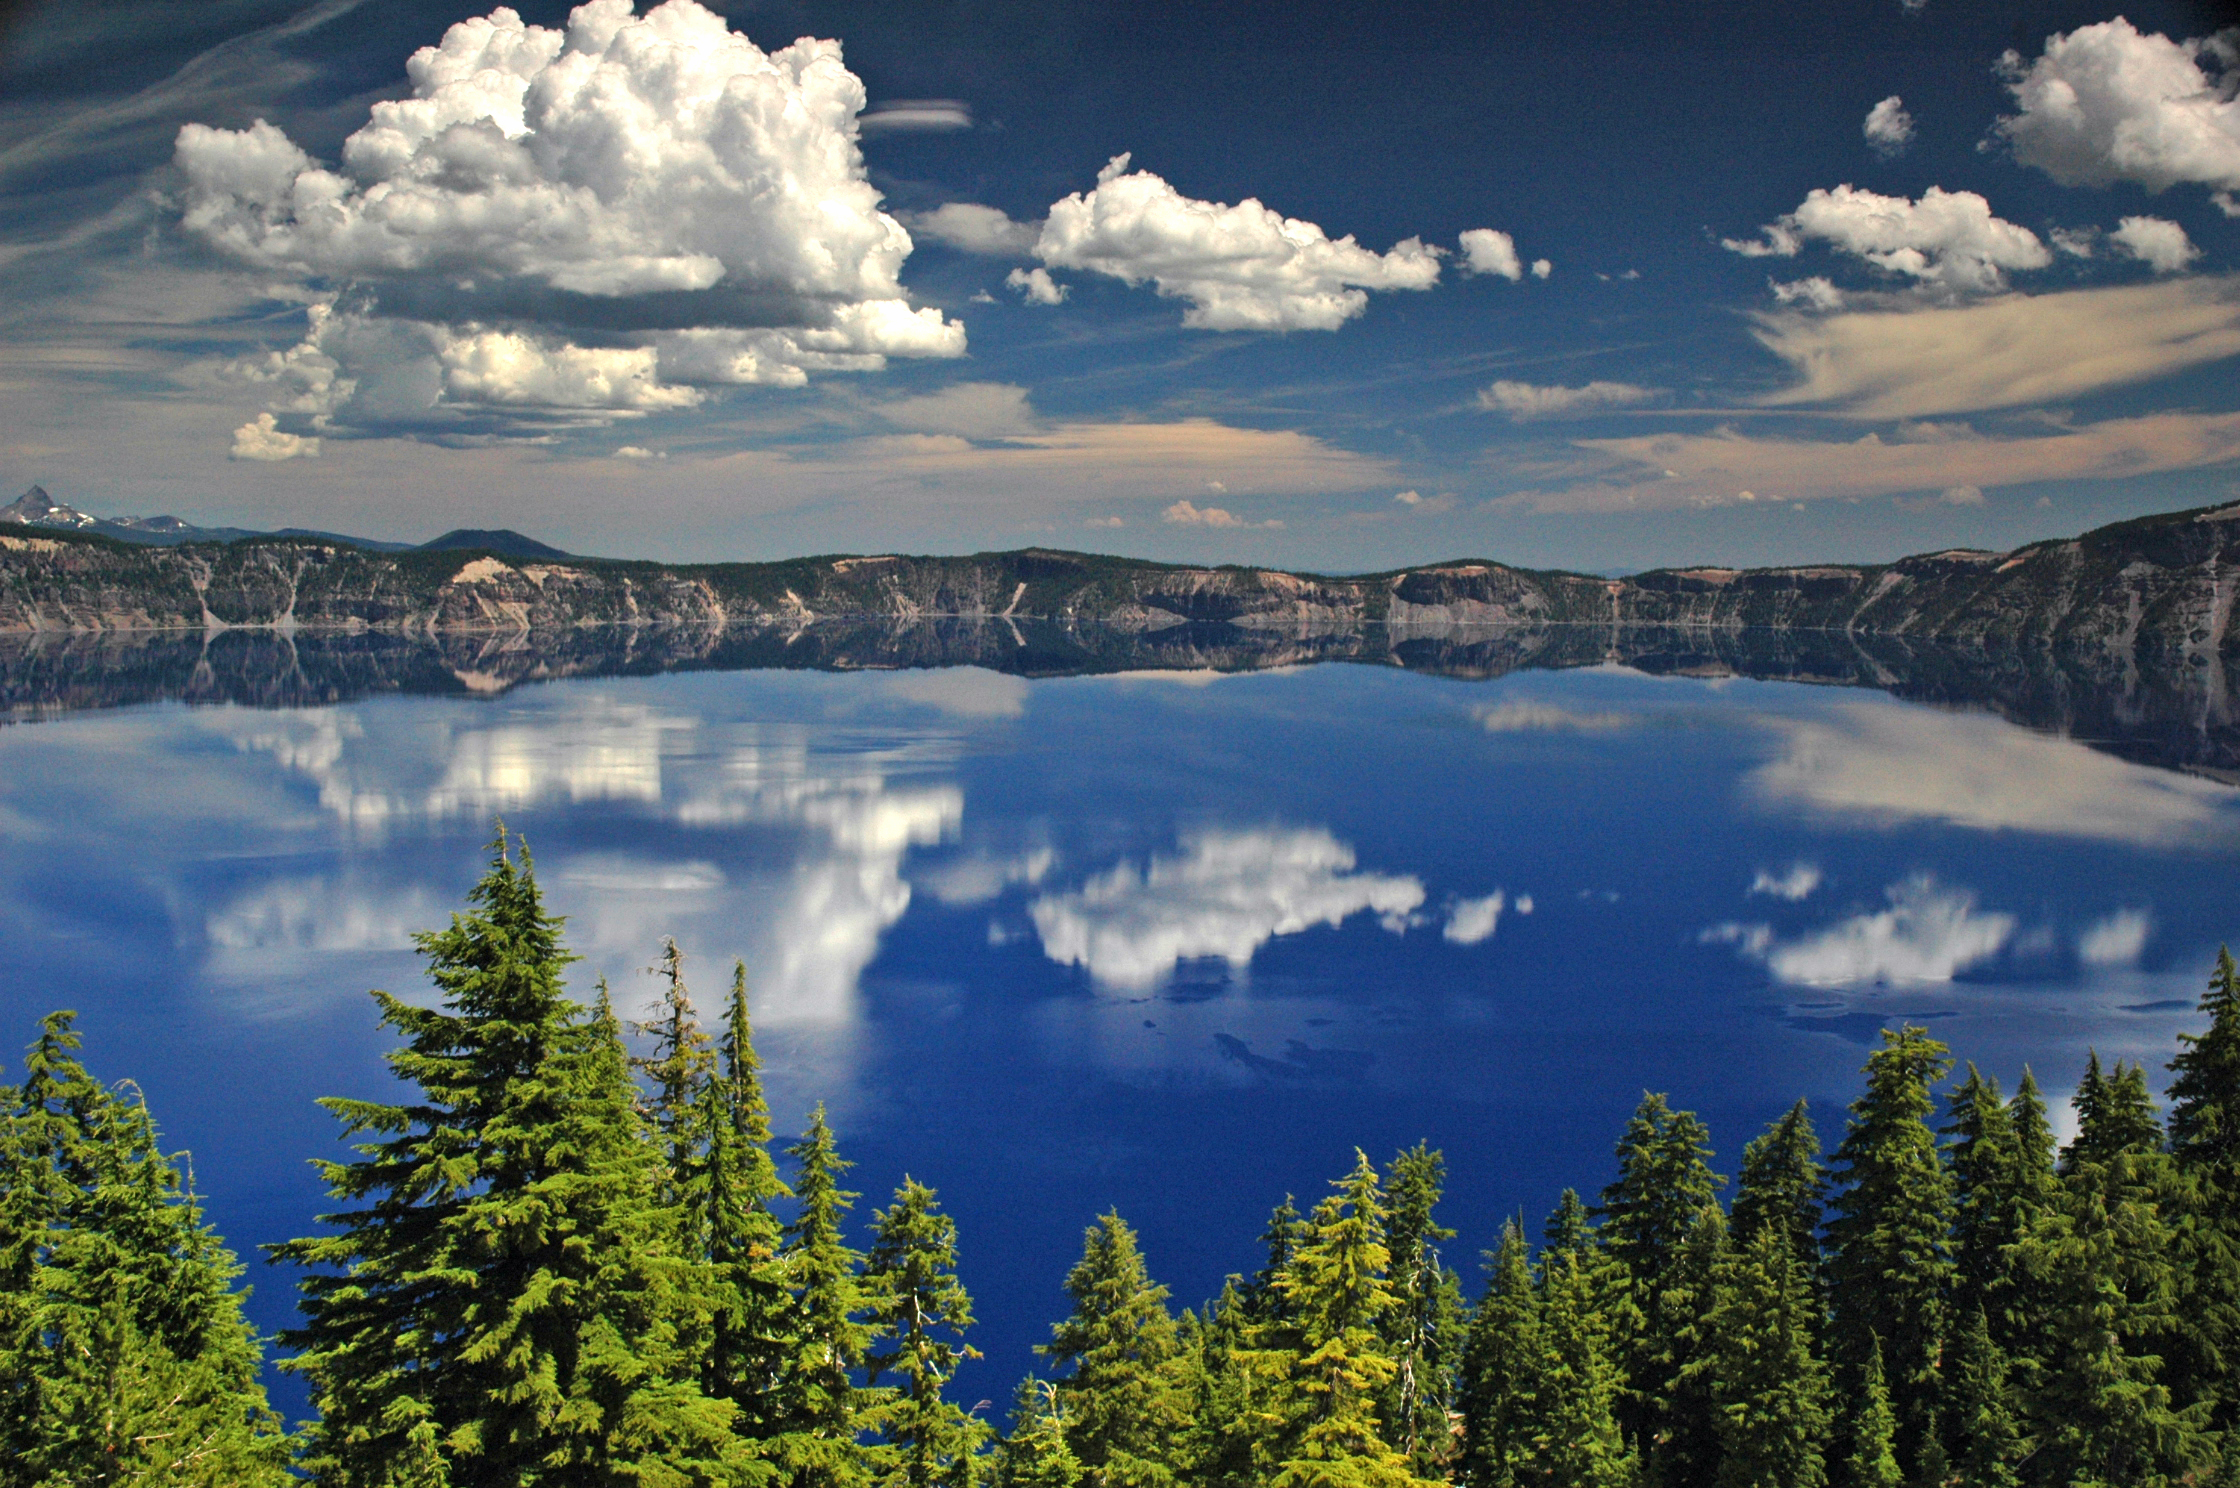 File:Crater Lake National Park Oregon.jpg - Wikipedia